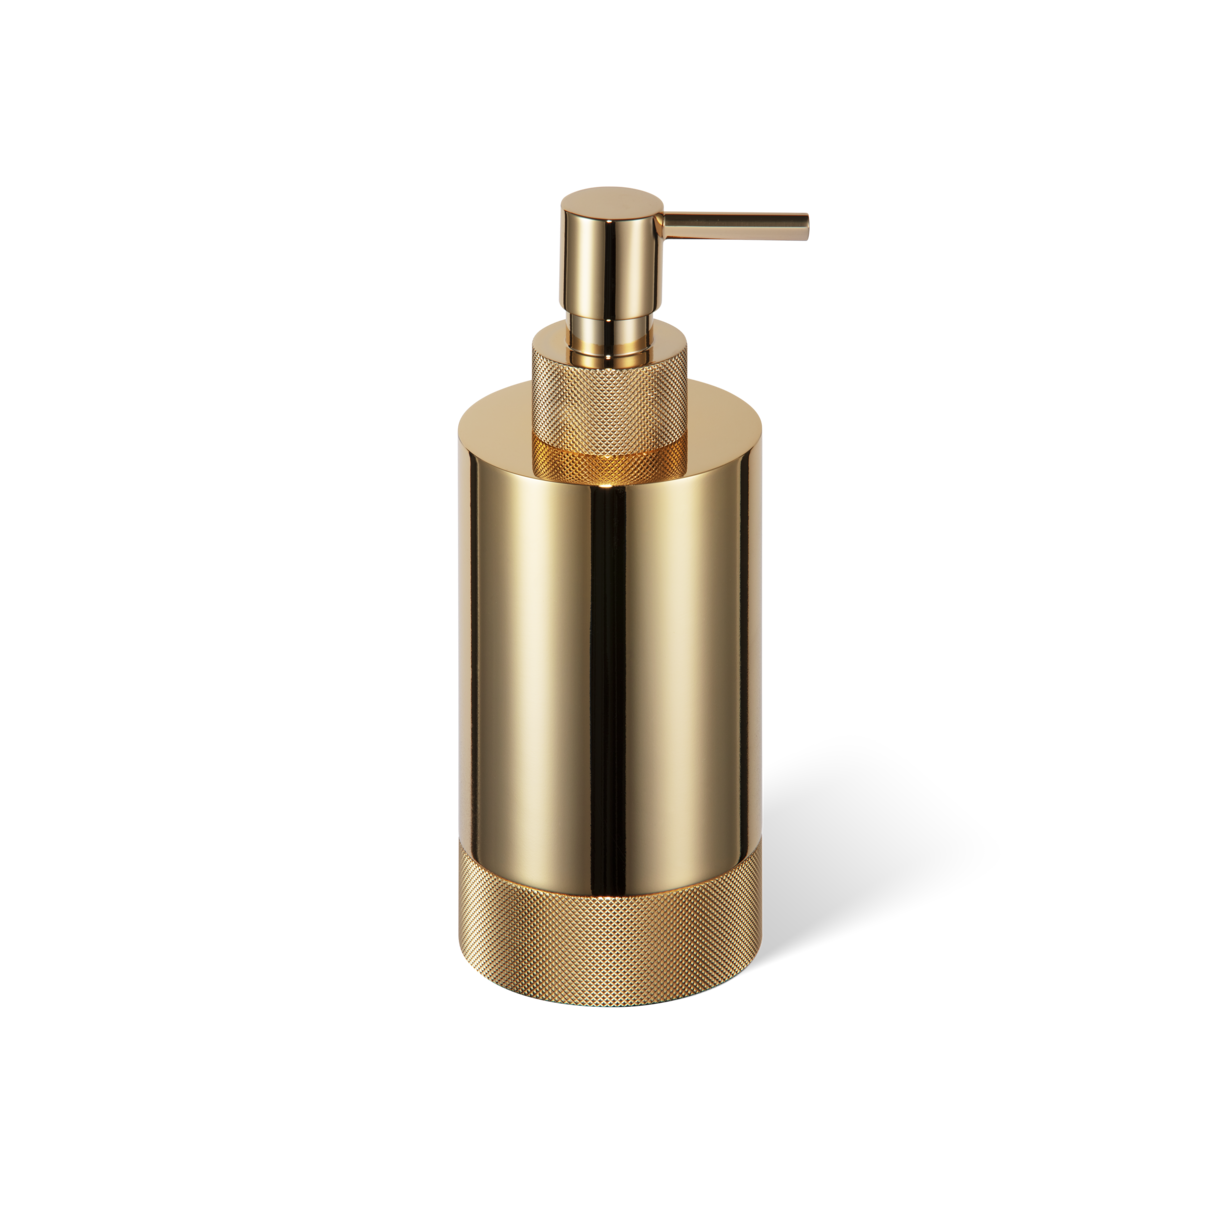 DW CLUB SSP 1 Soap dispenser Gold 24 Carat / Gold